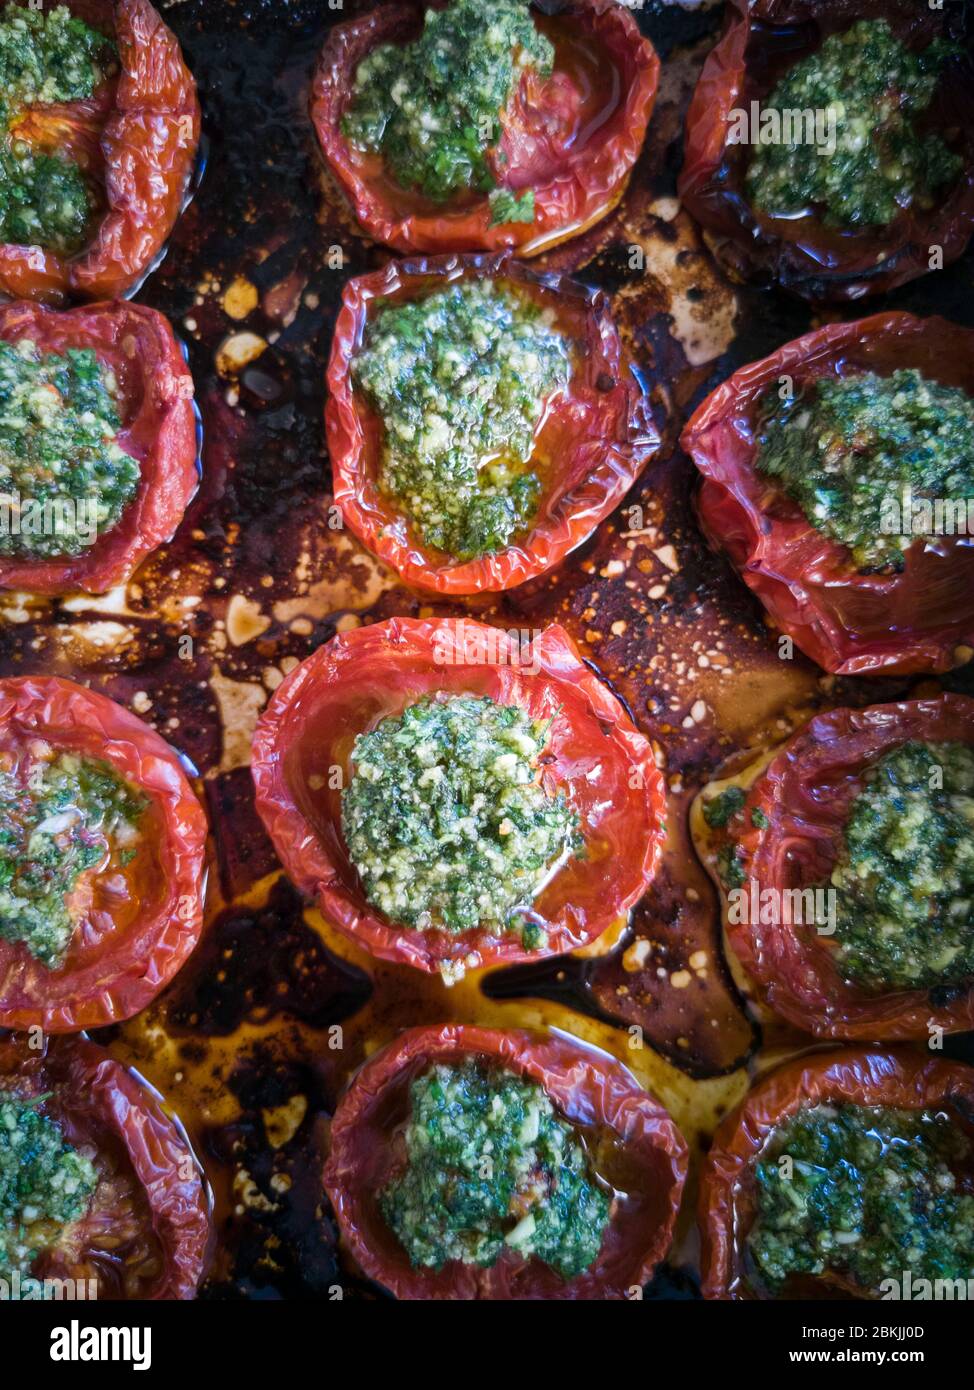 France, Vaucluse, Lourmarin, dish of stuffed tomatoes Stock Photo